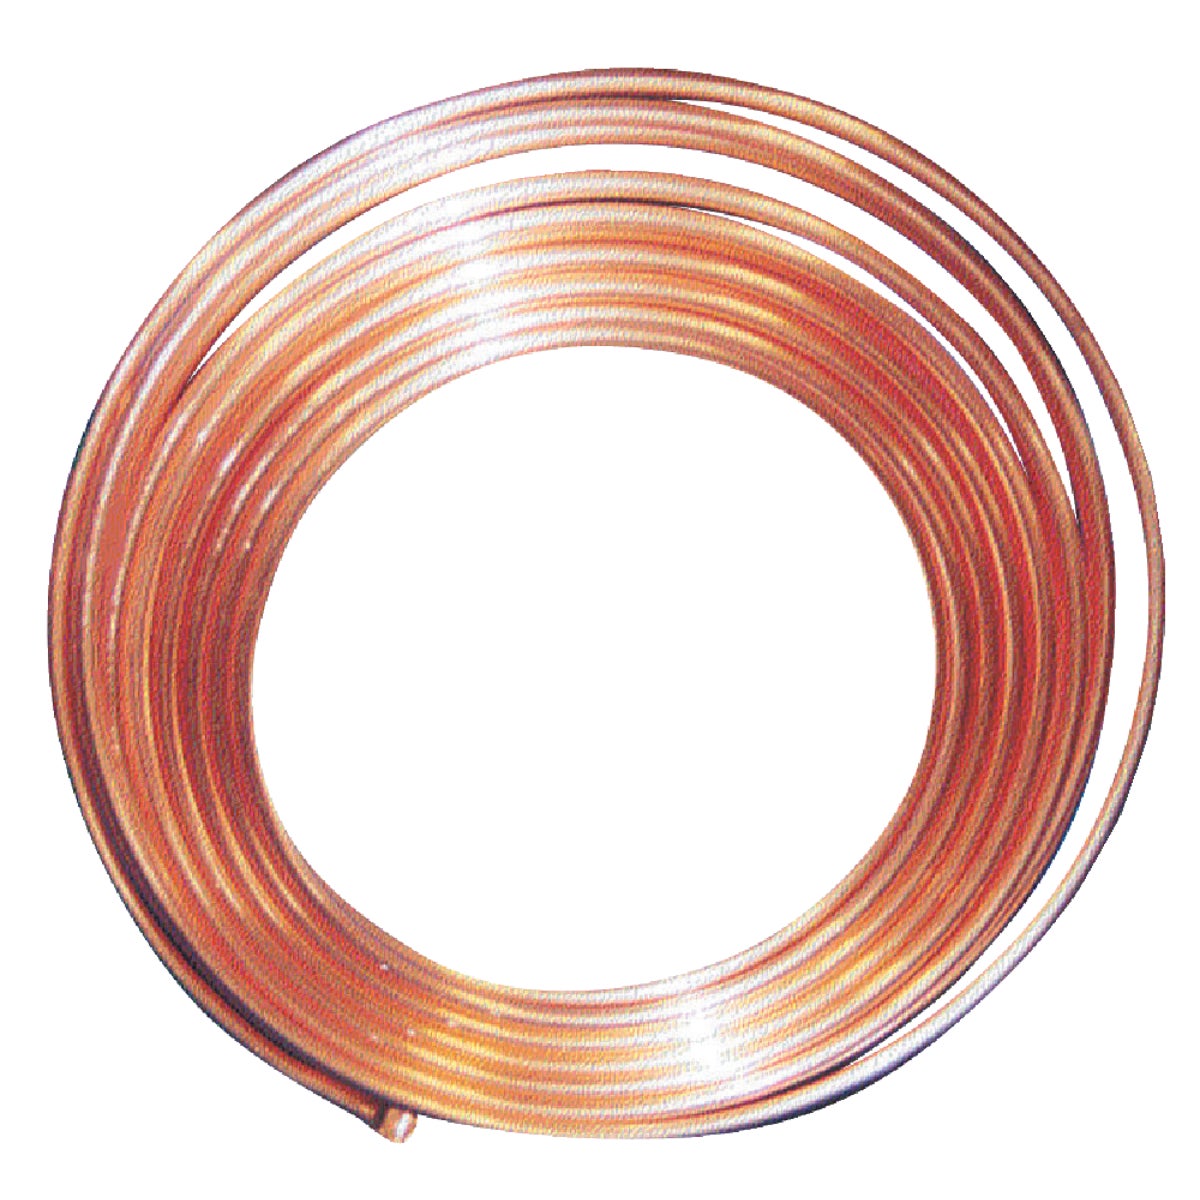 Item 402230, Type K copper tubing.